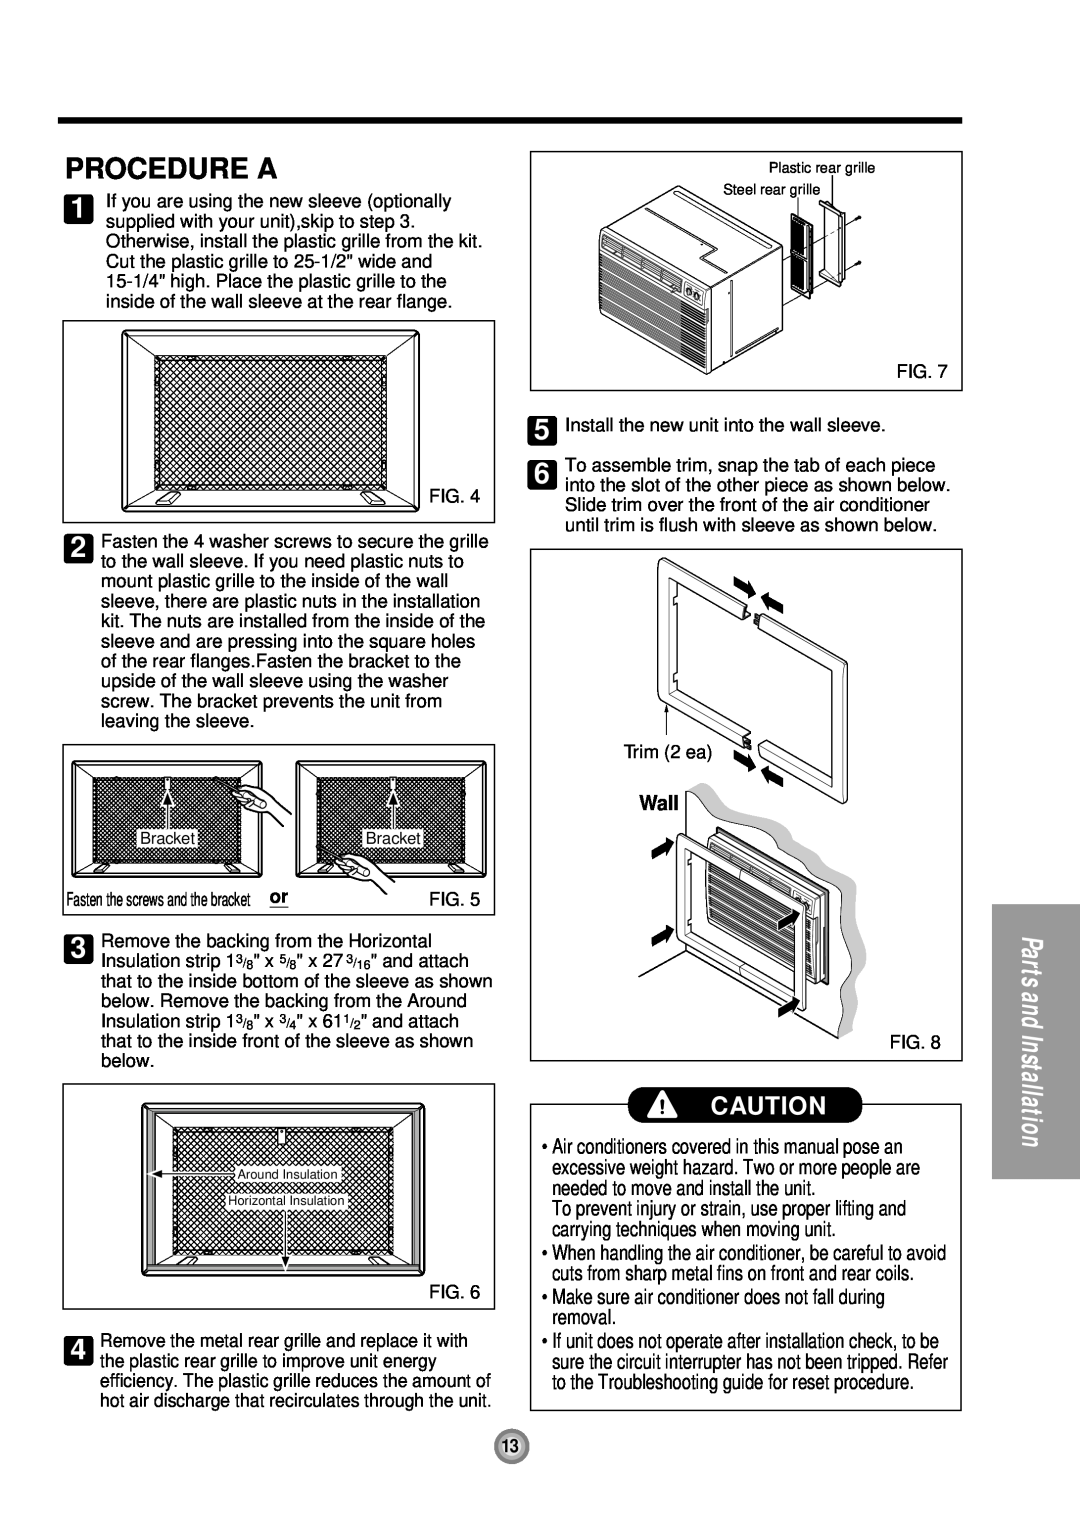 Friedrich UE10, UE12, UE08 manual Procedure A, Wall, Parts and, Installation 